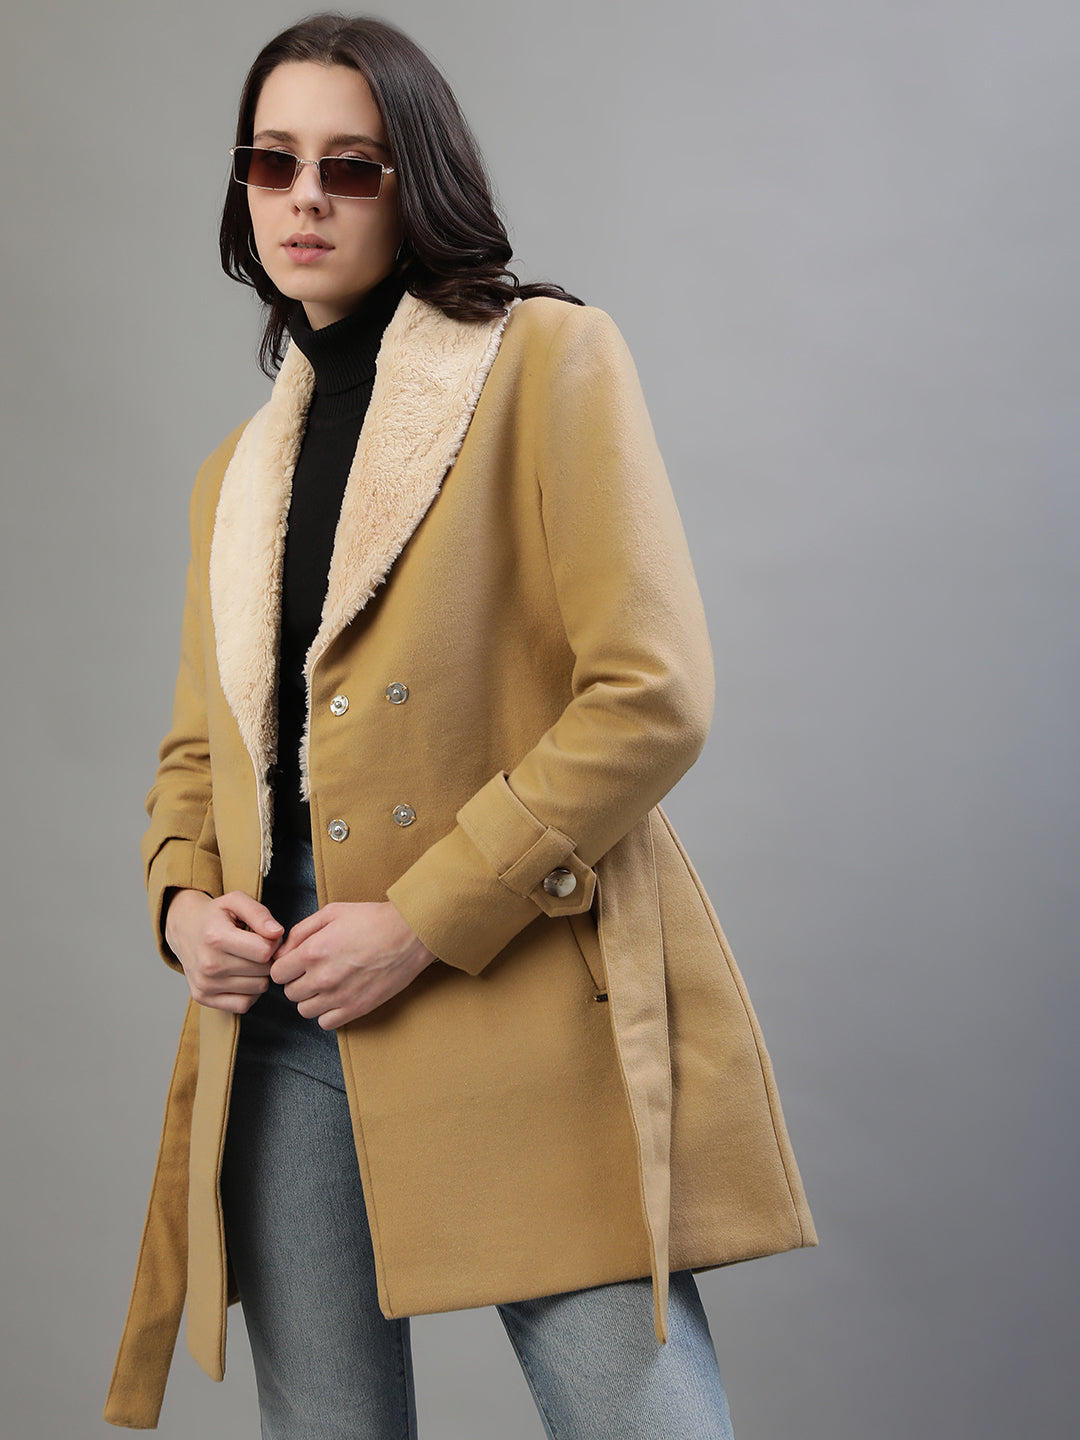 Black curly faux fur jacket 1960s short coat mink collar brown XS S 36 bust